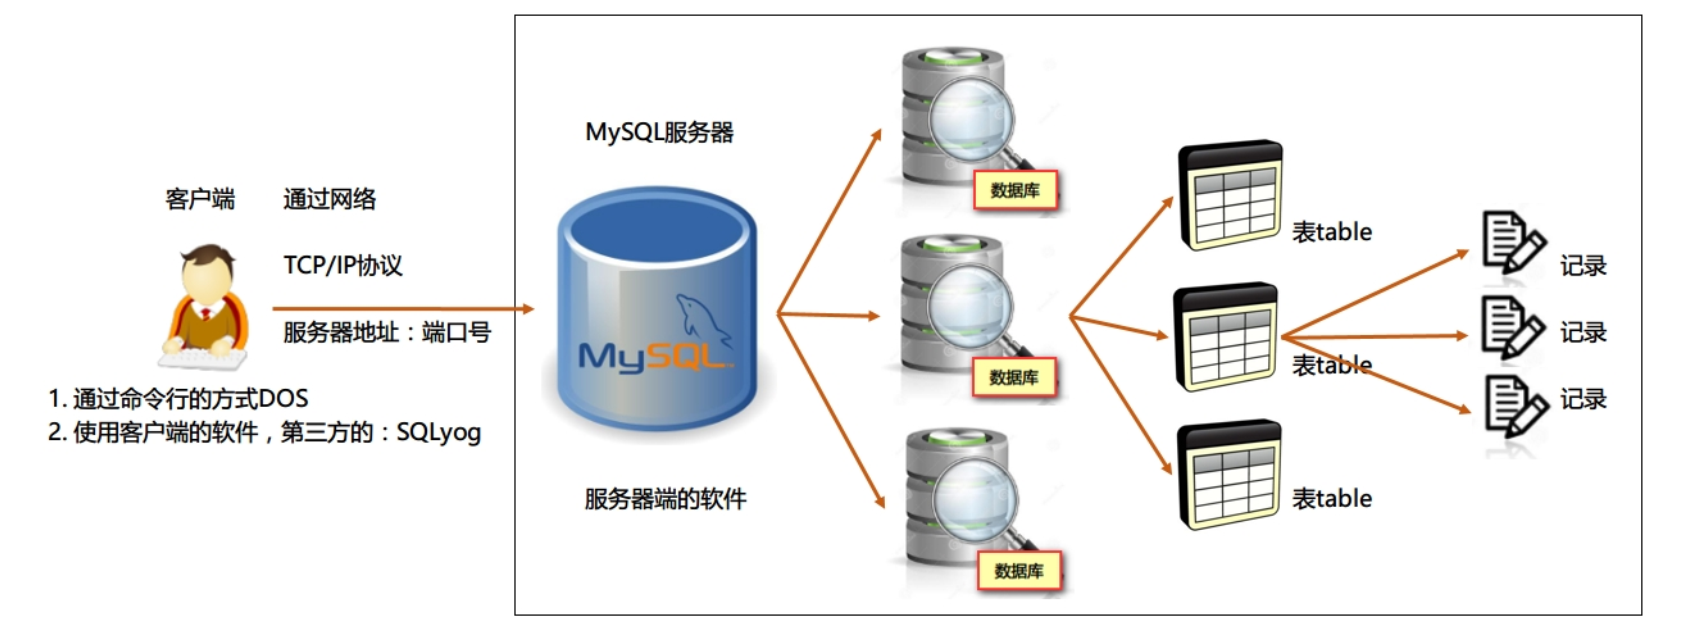 MySQL - 图1